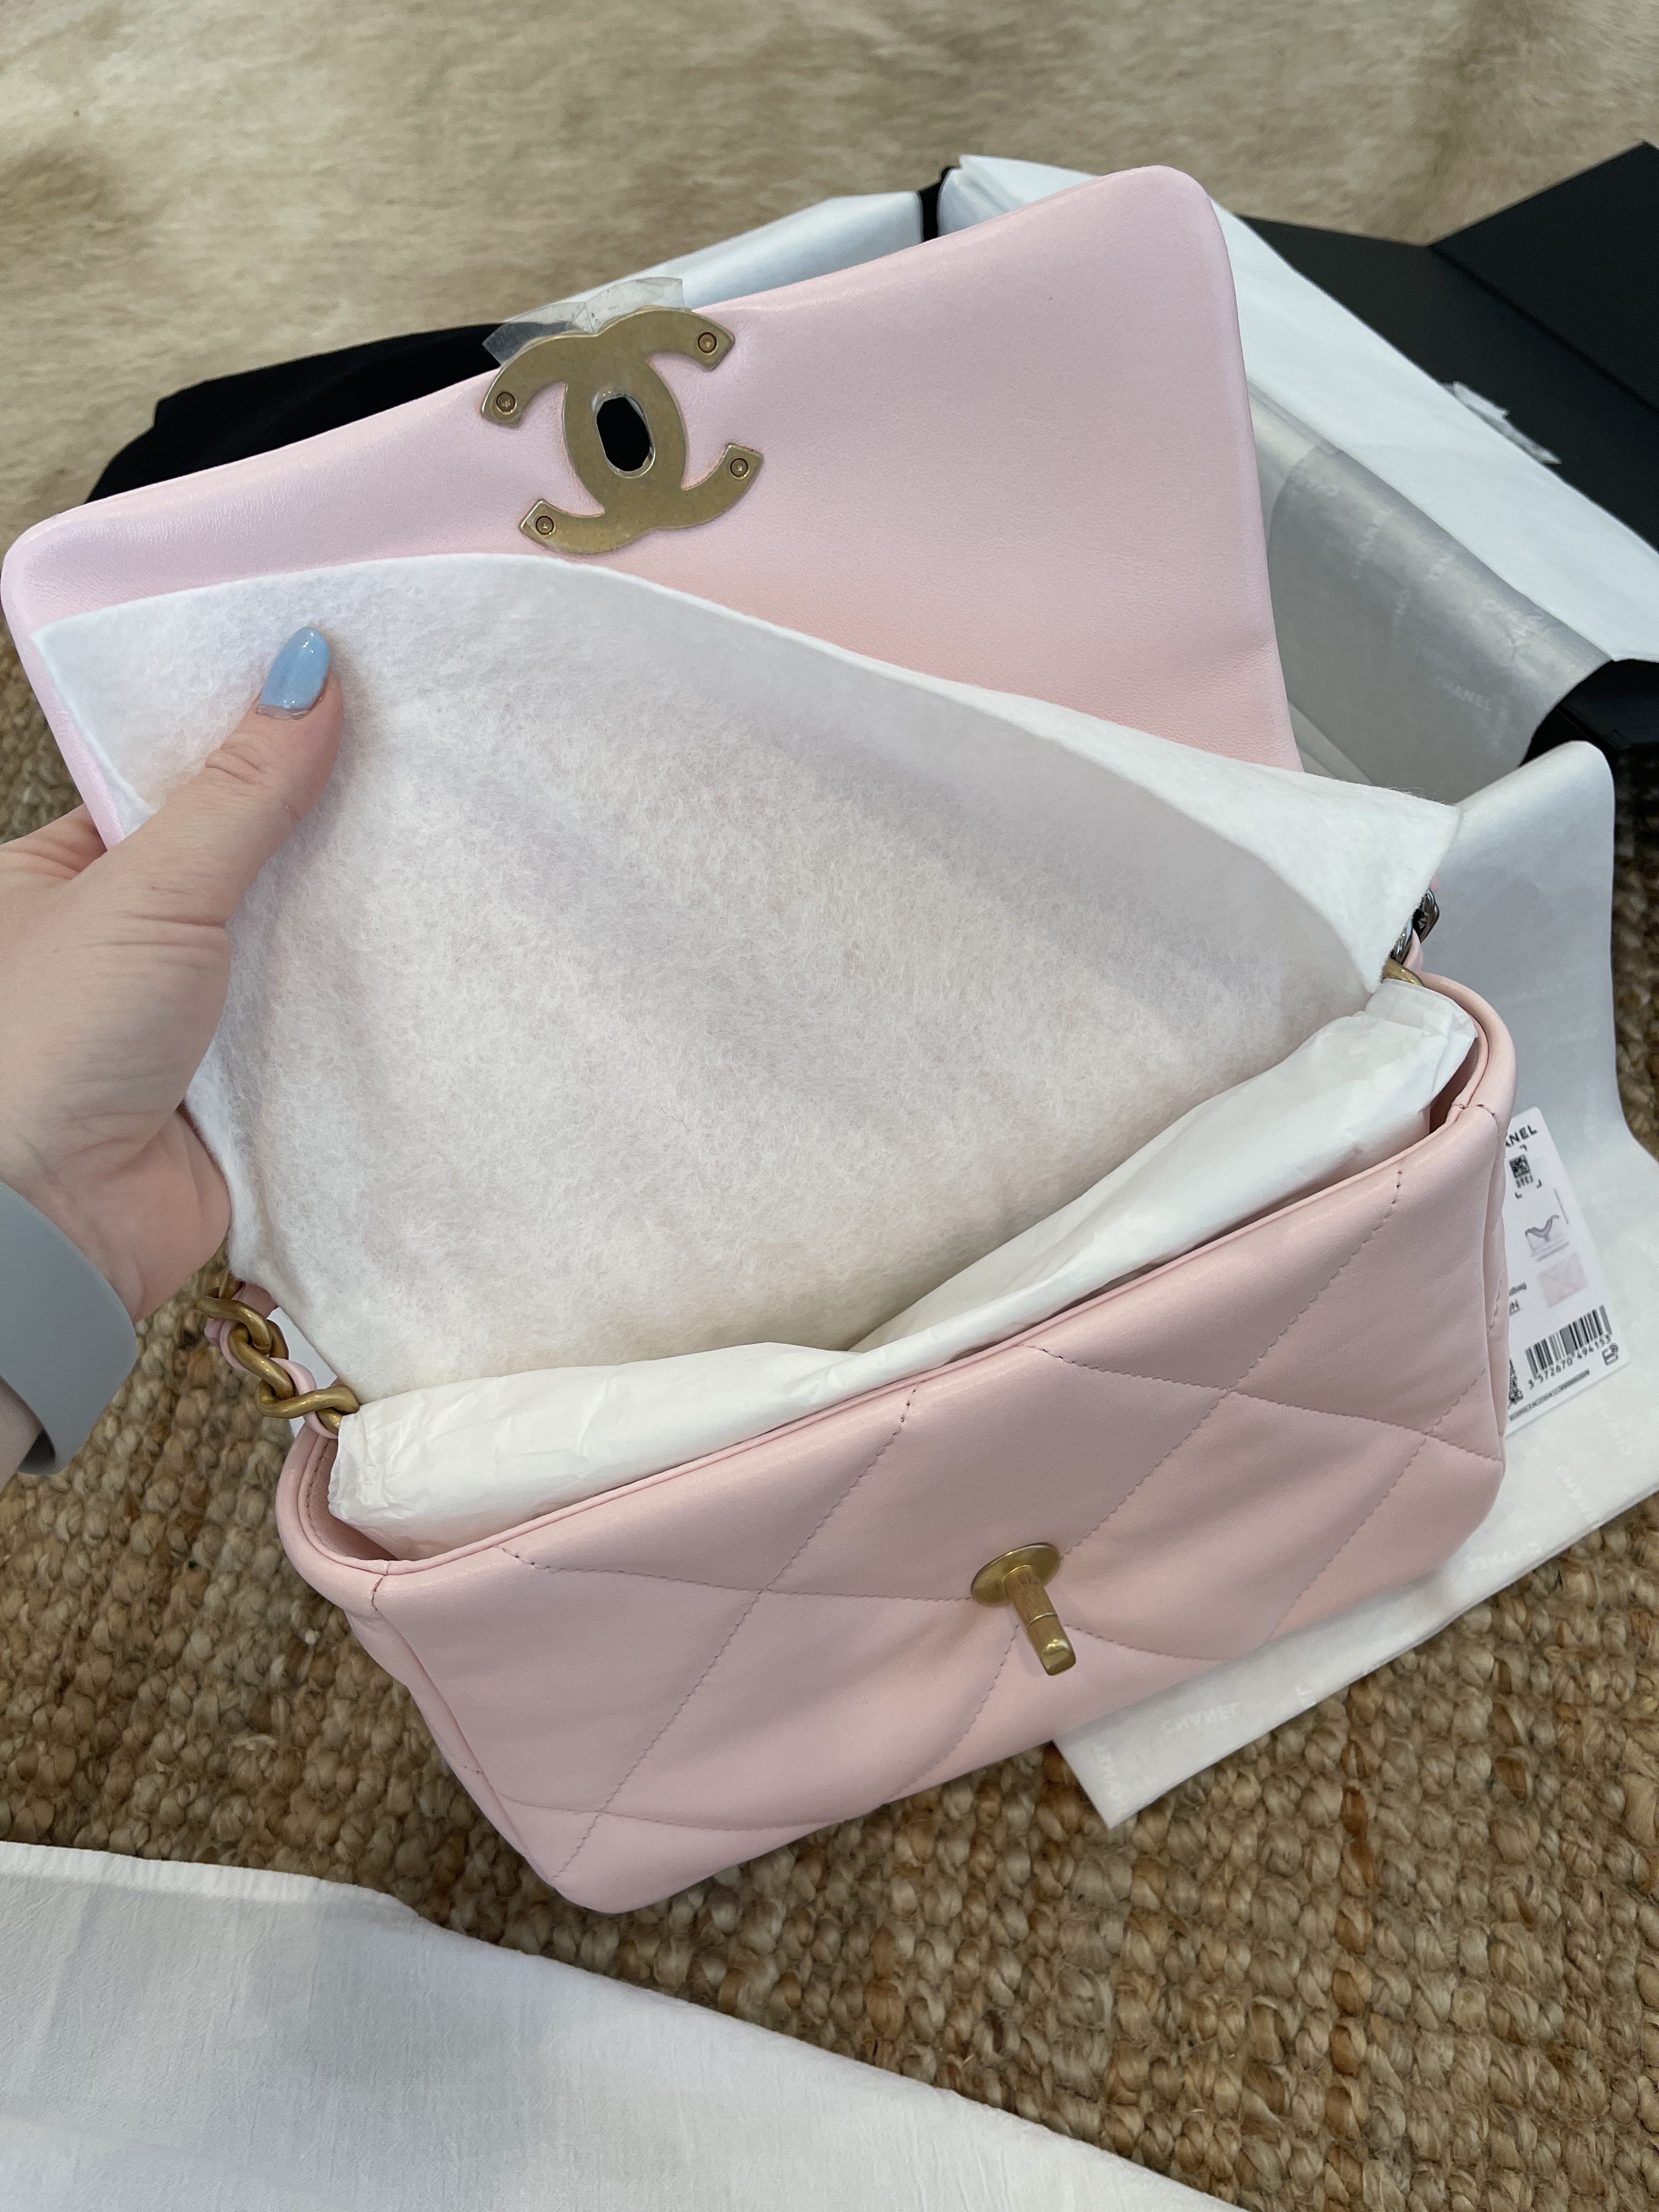 Pink Quilted Lambskin Chanel 19 Flap Bag Medium Q6B1T31IP7000